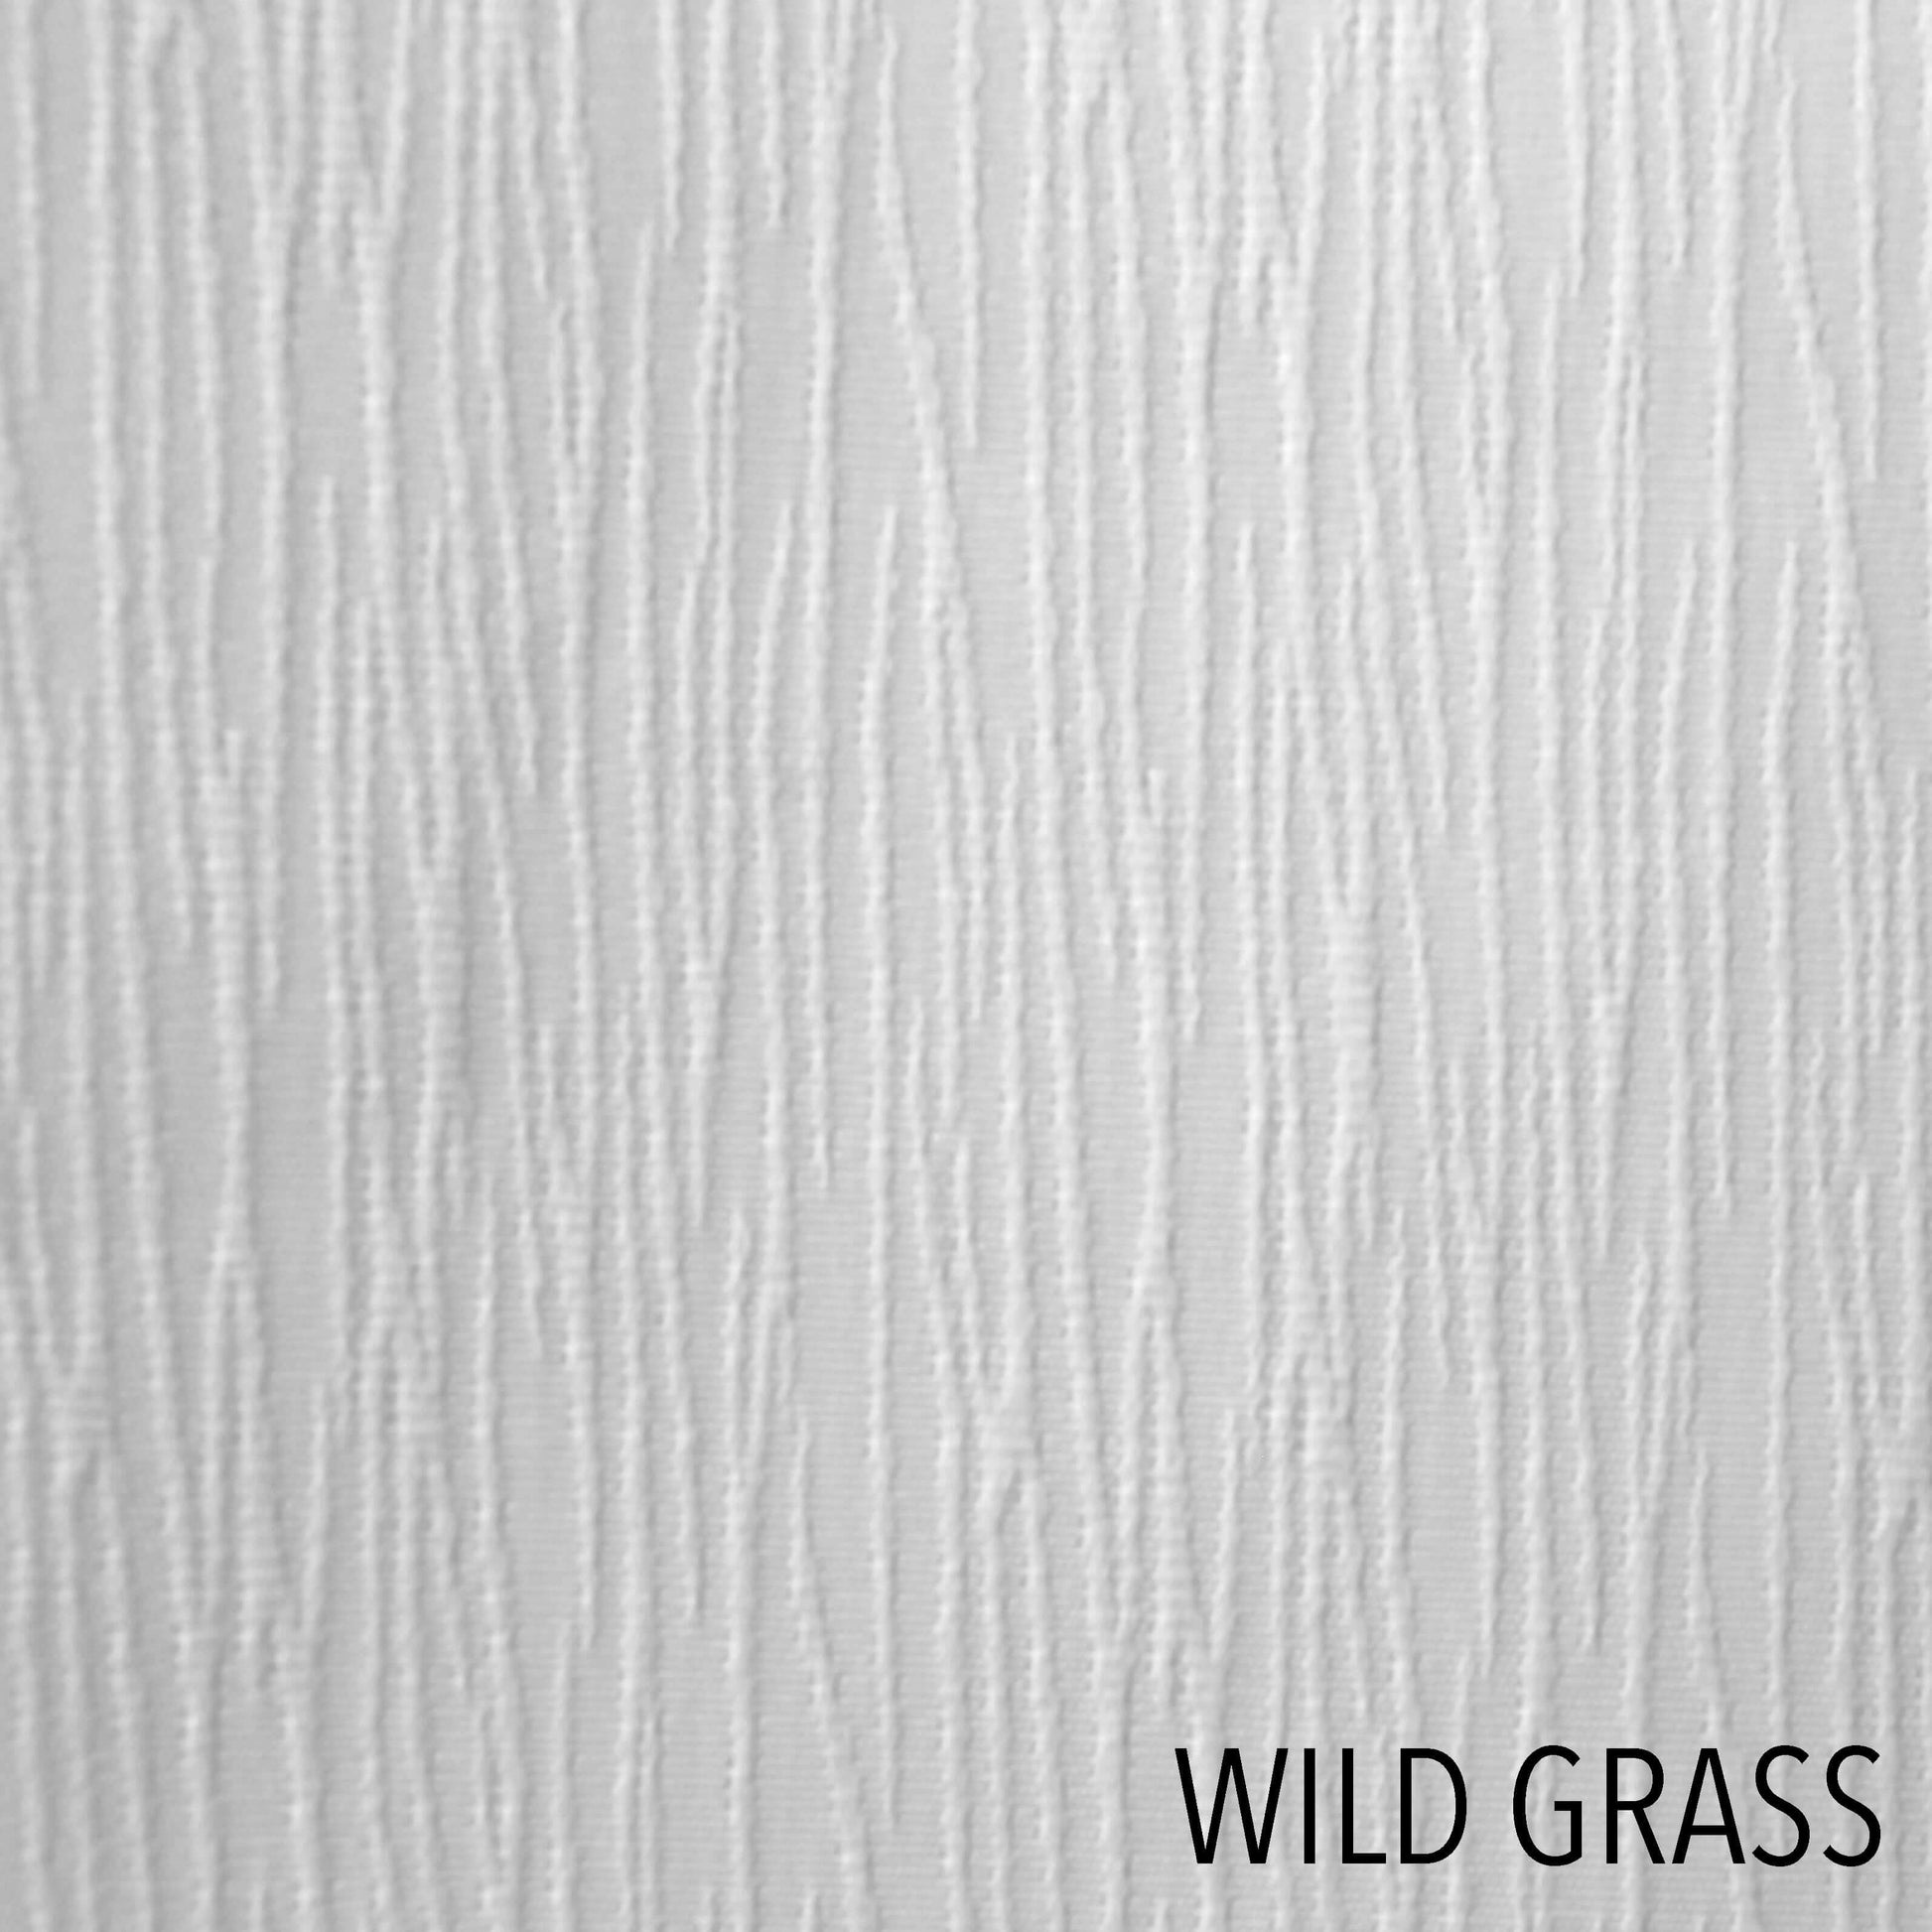 Quality Wild Grass Decorative Top Sheet